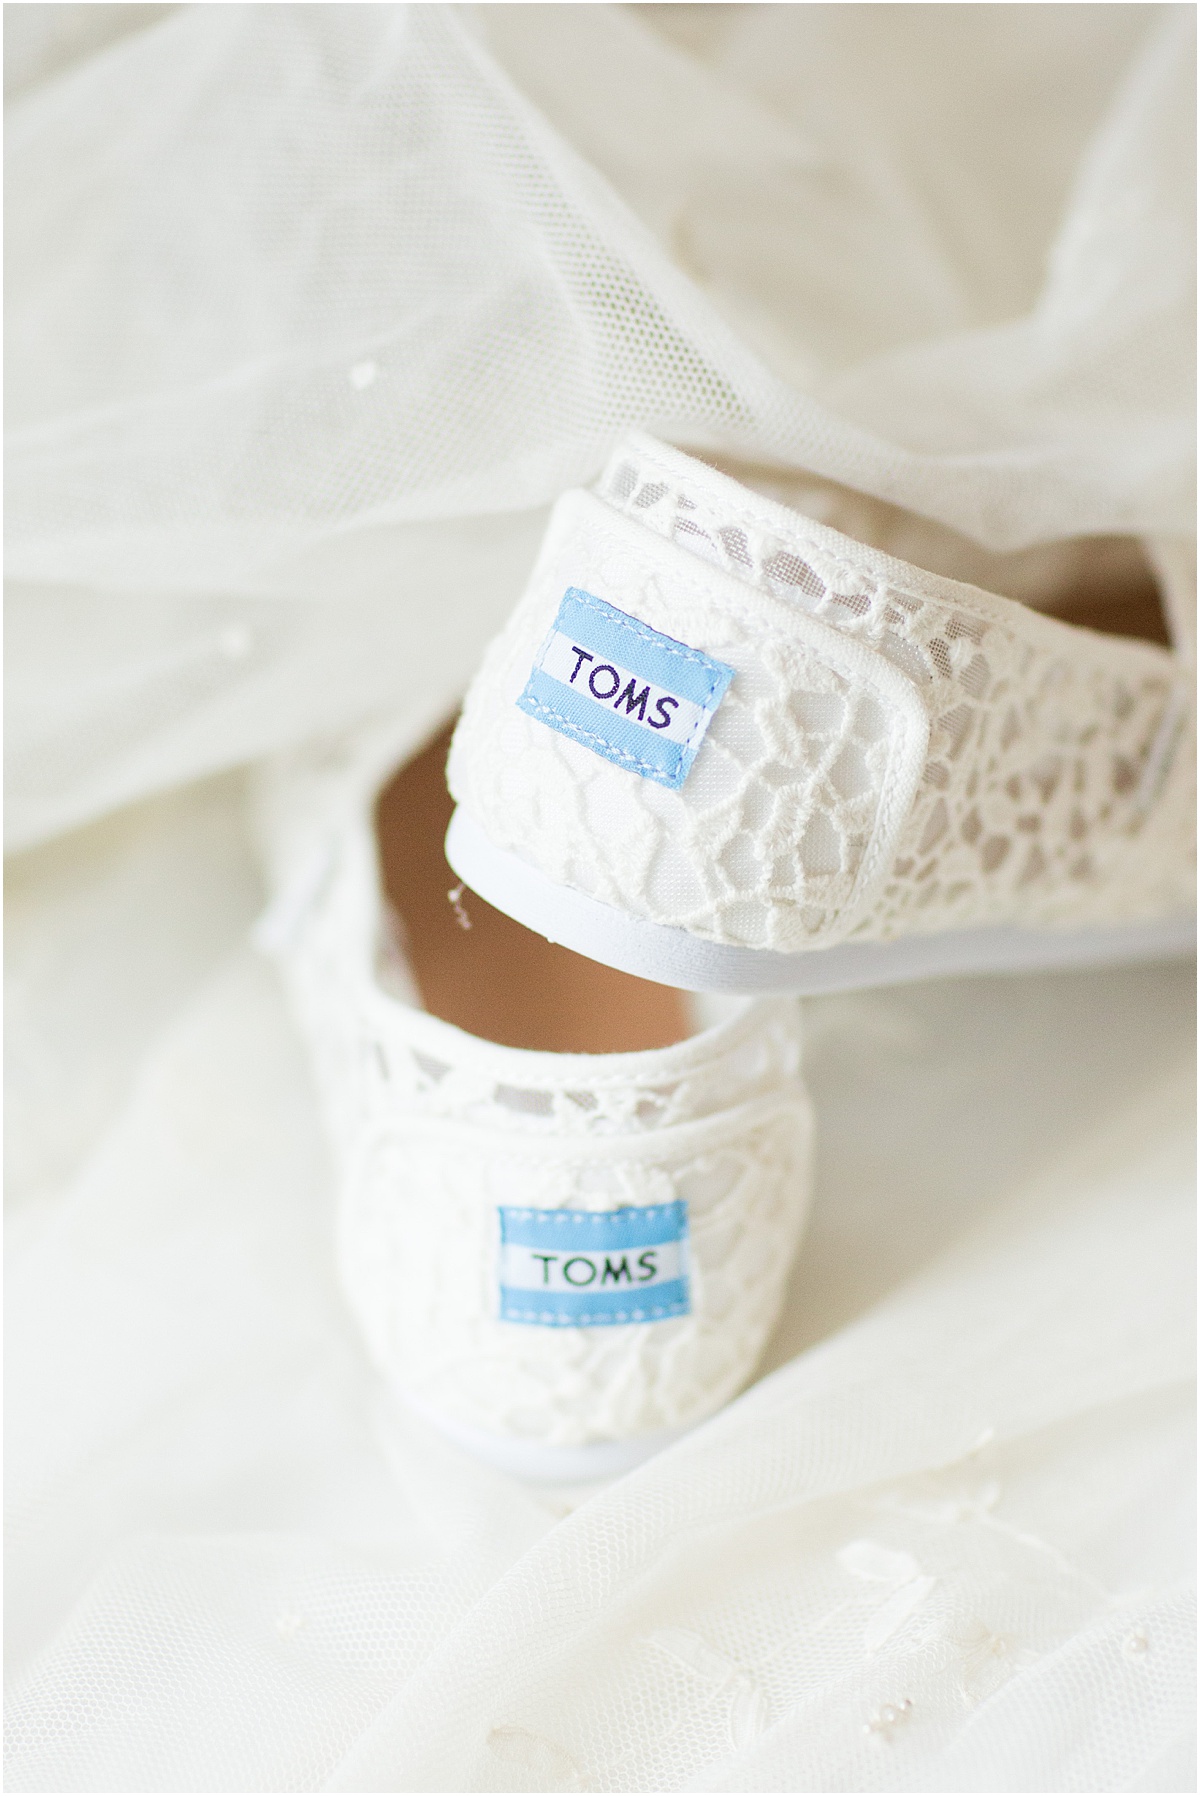 Lace Toms wedding shoes